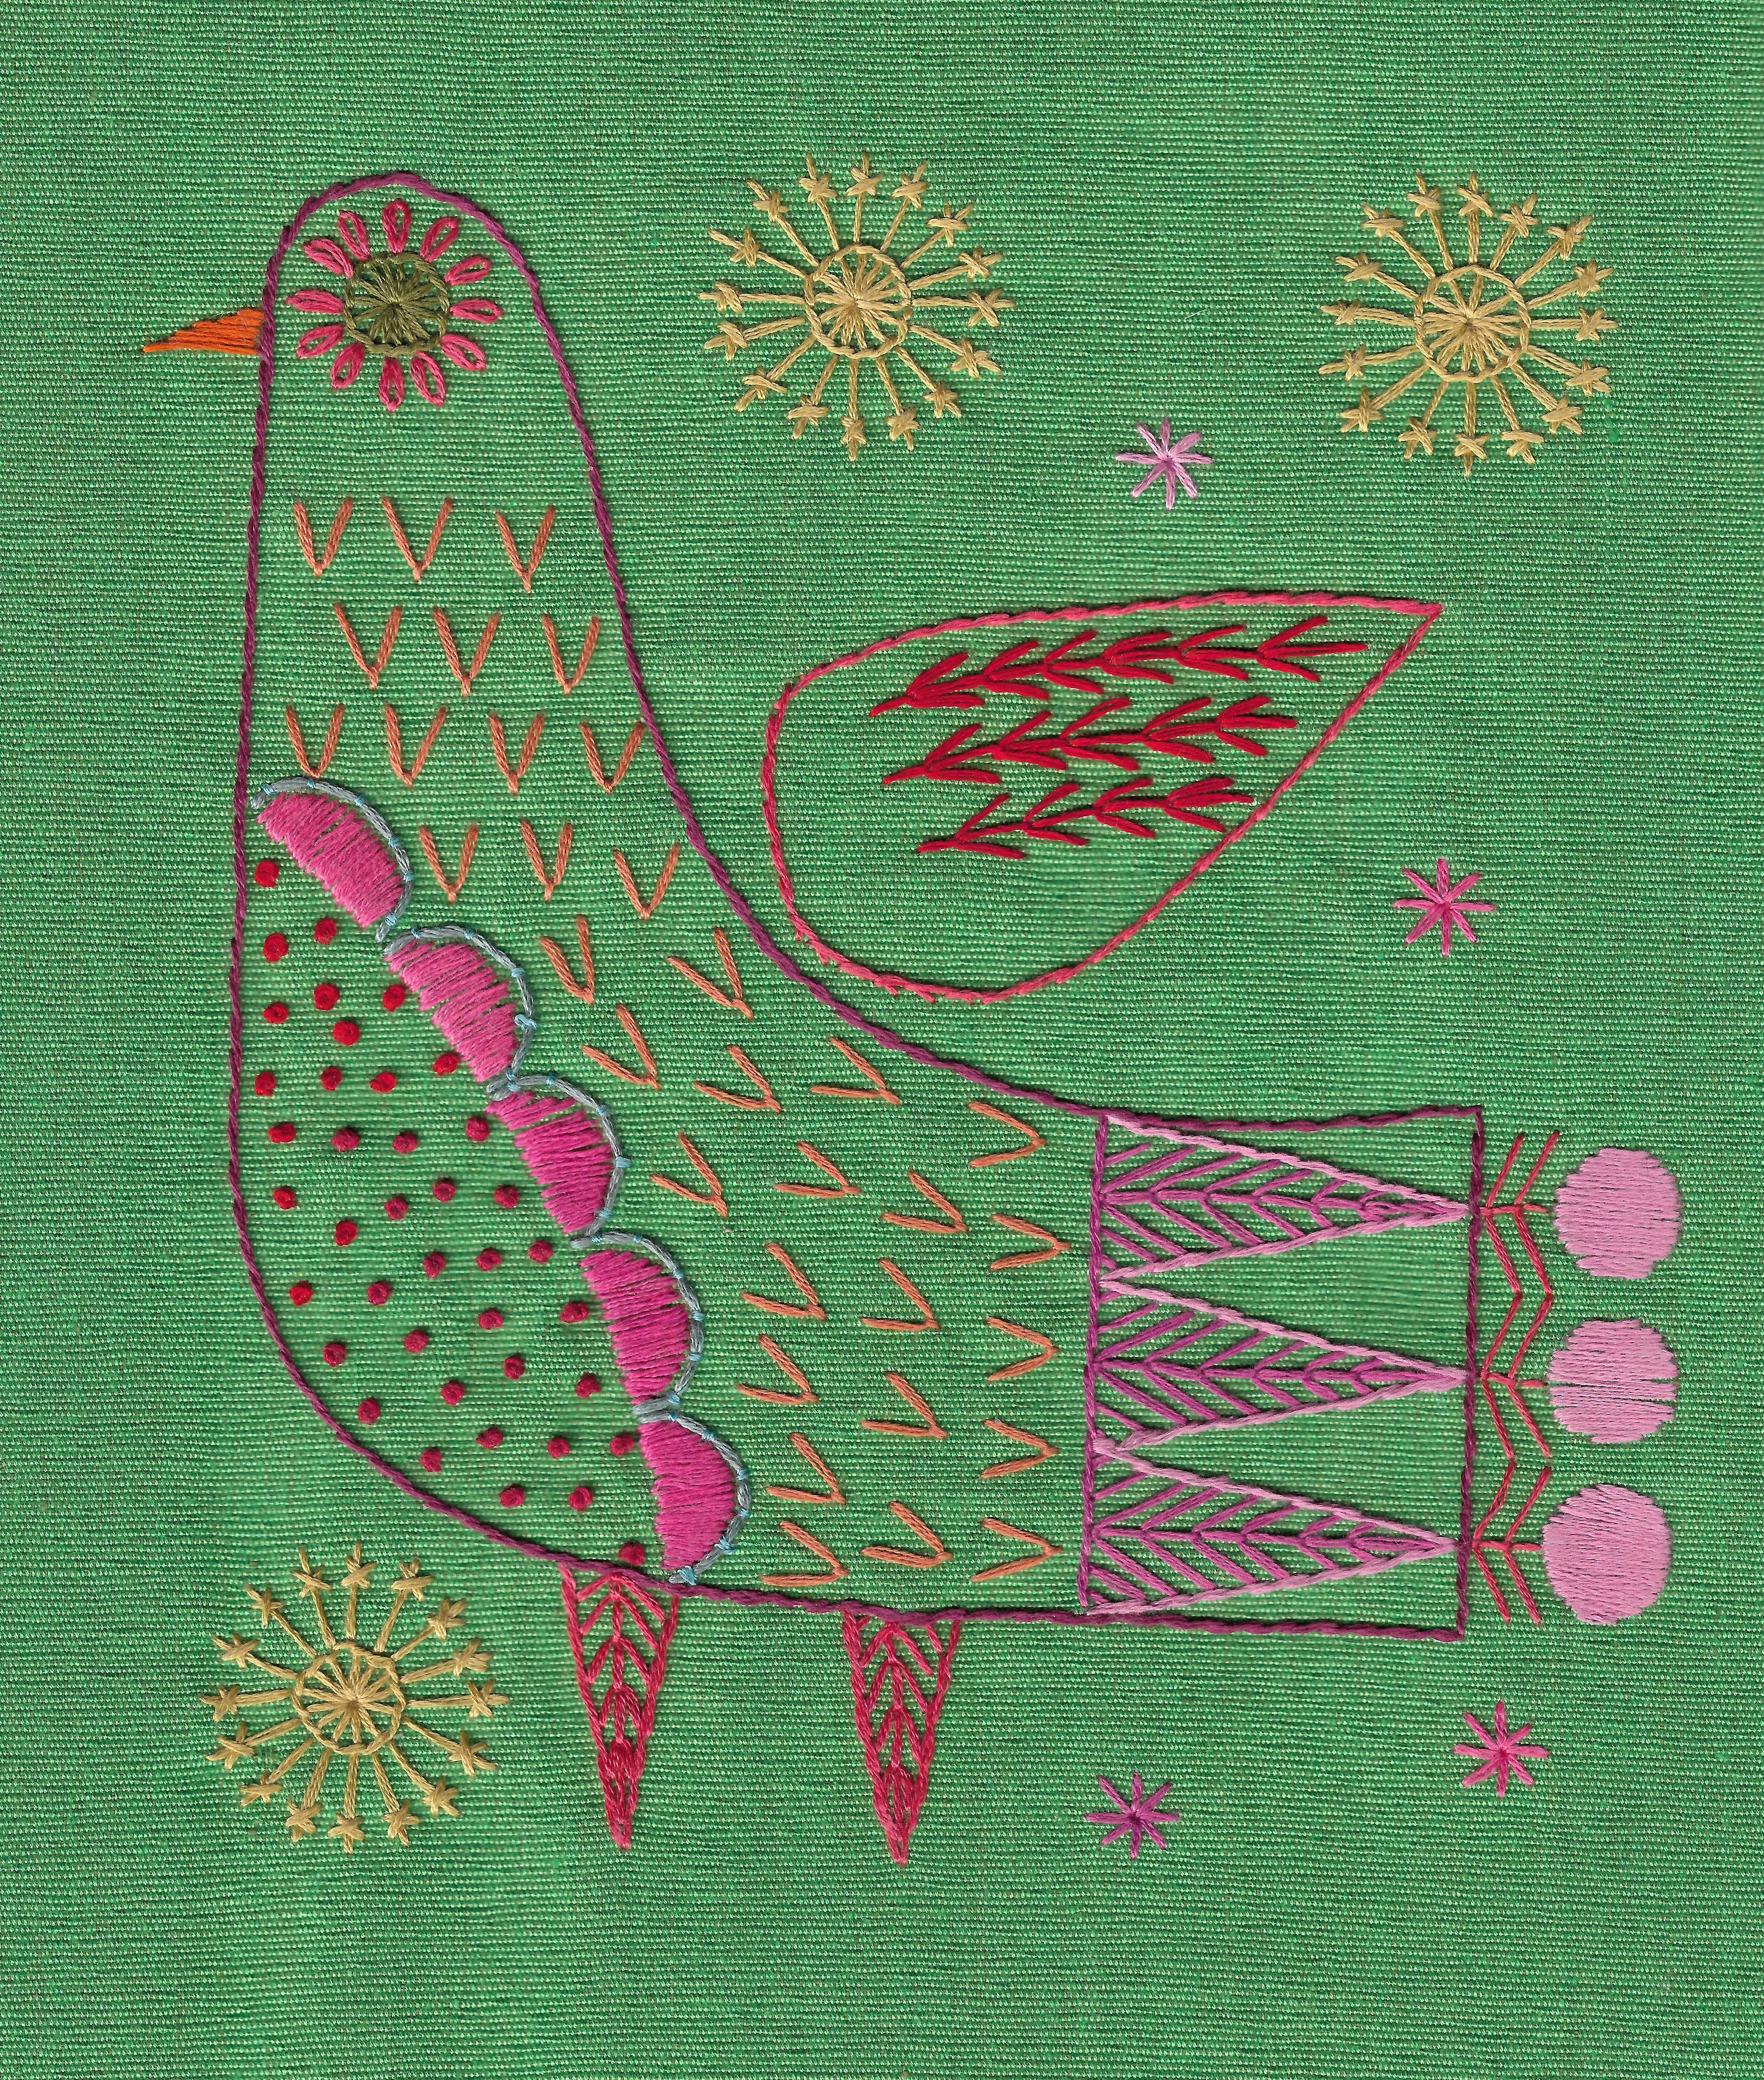 Transfer Embroidery Pattern Bright Bird Iron On Transfer Embroidery Pattern